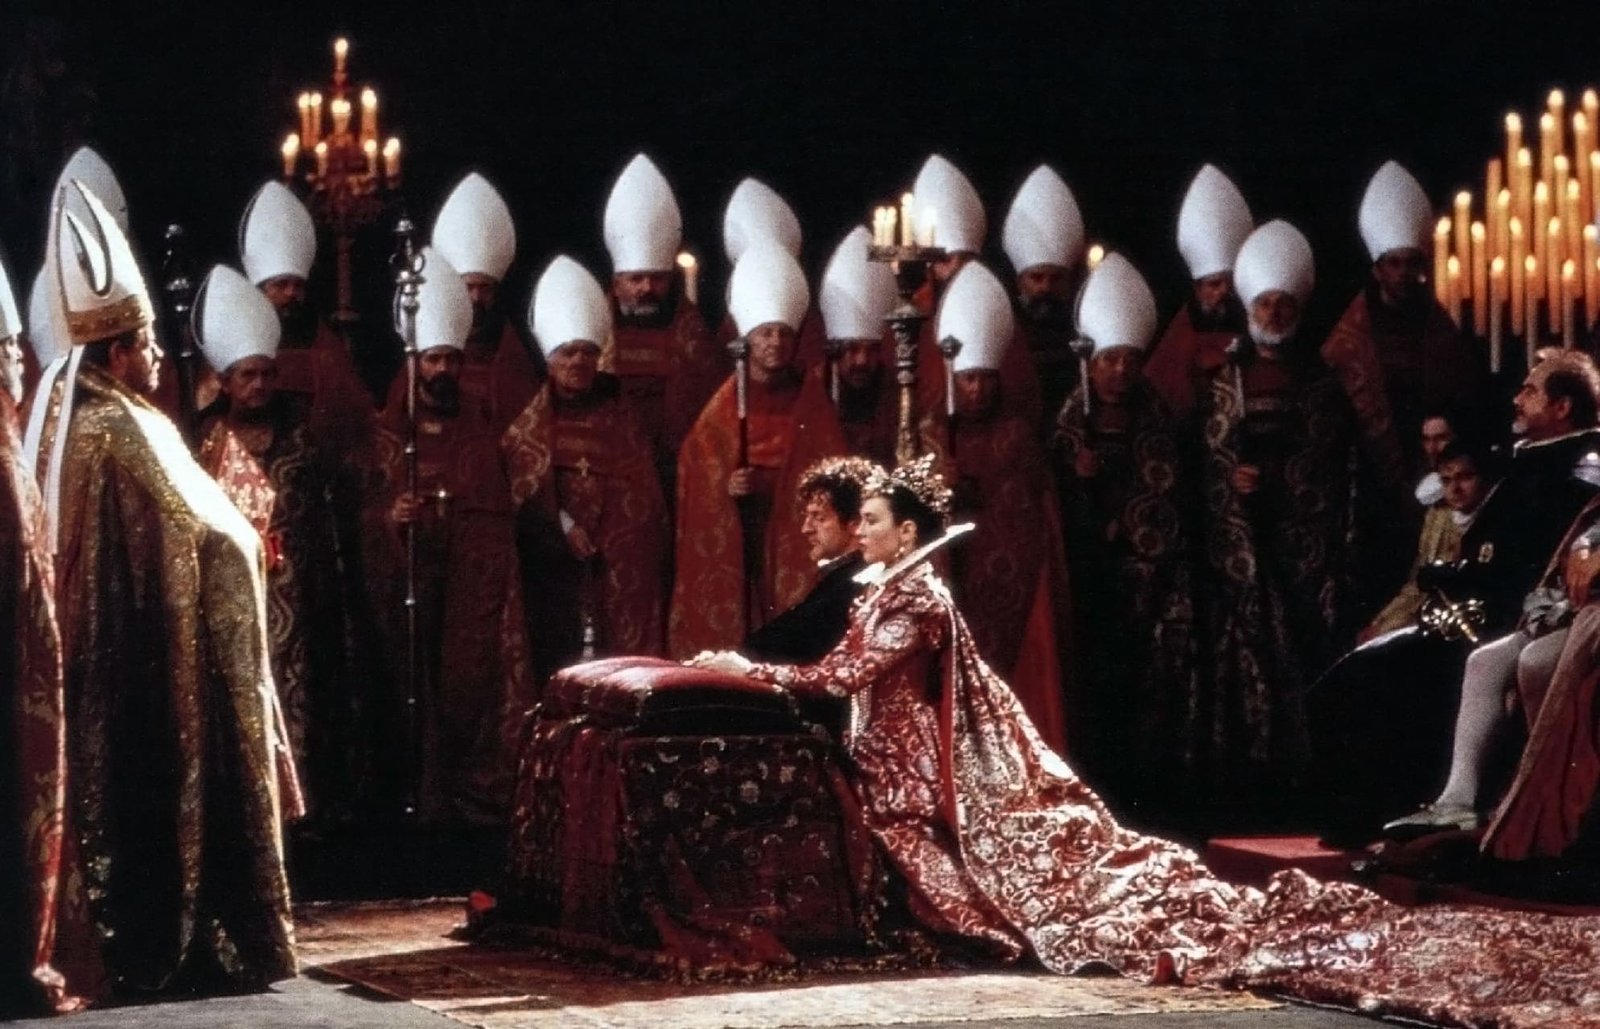 Daniel Auteuil and Isabelle Adjani in La reine Margot directed by Patrice Chéreau, 1994